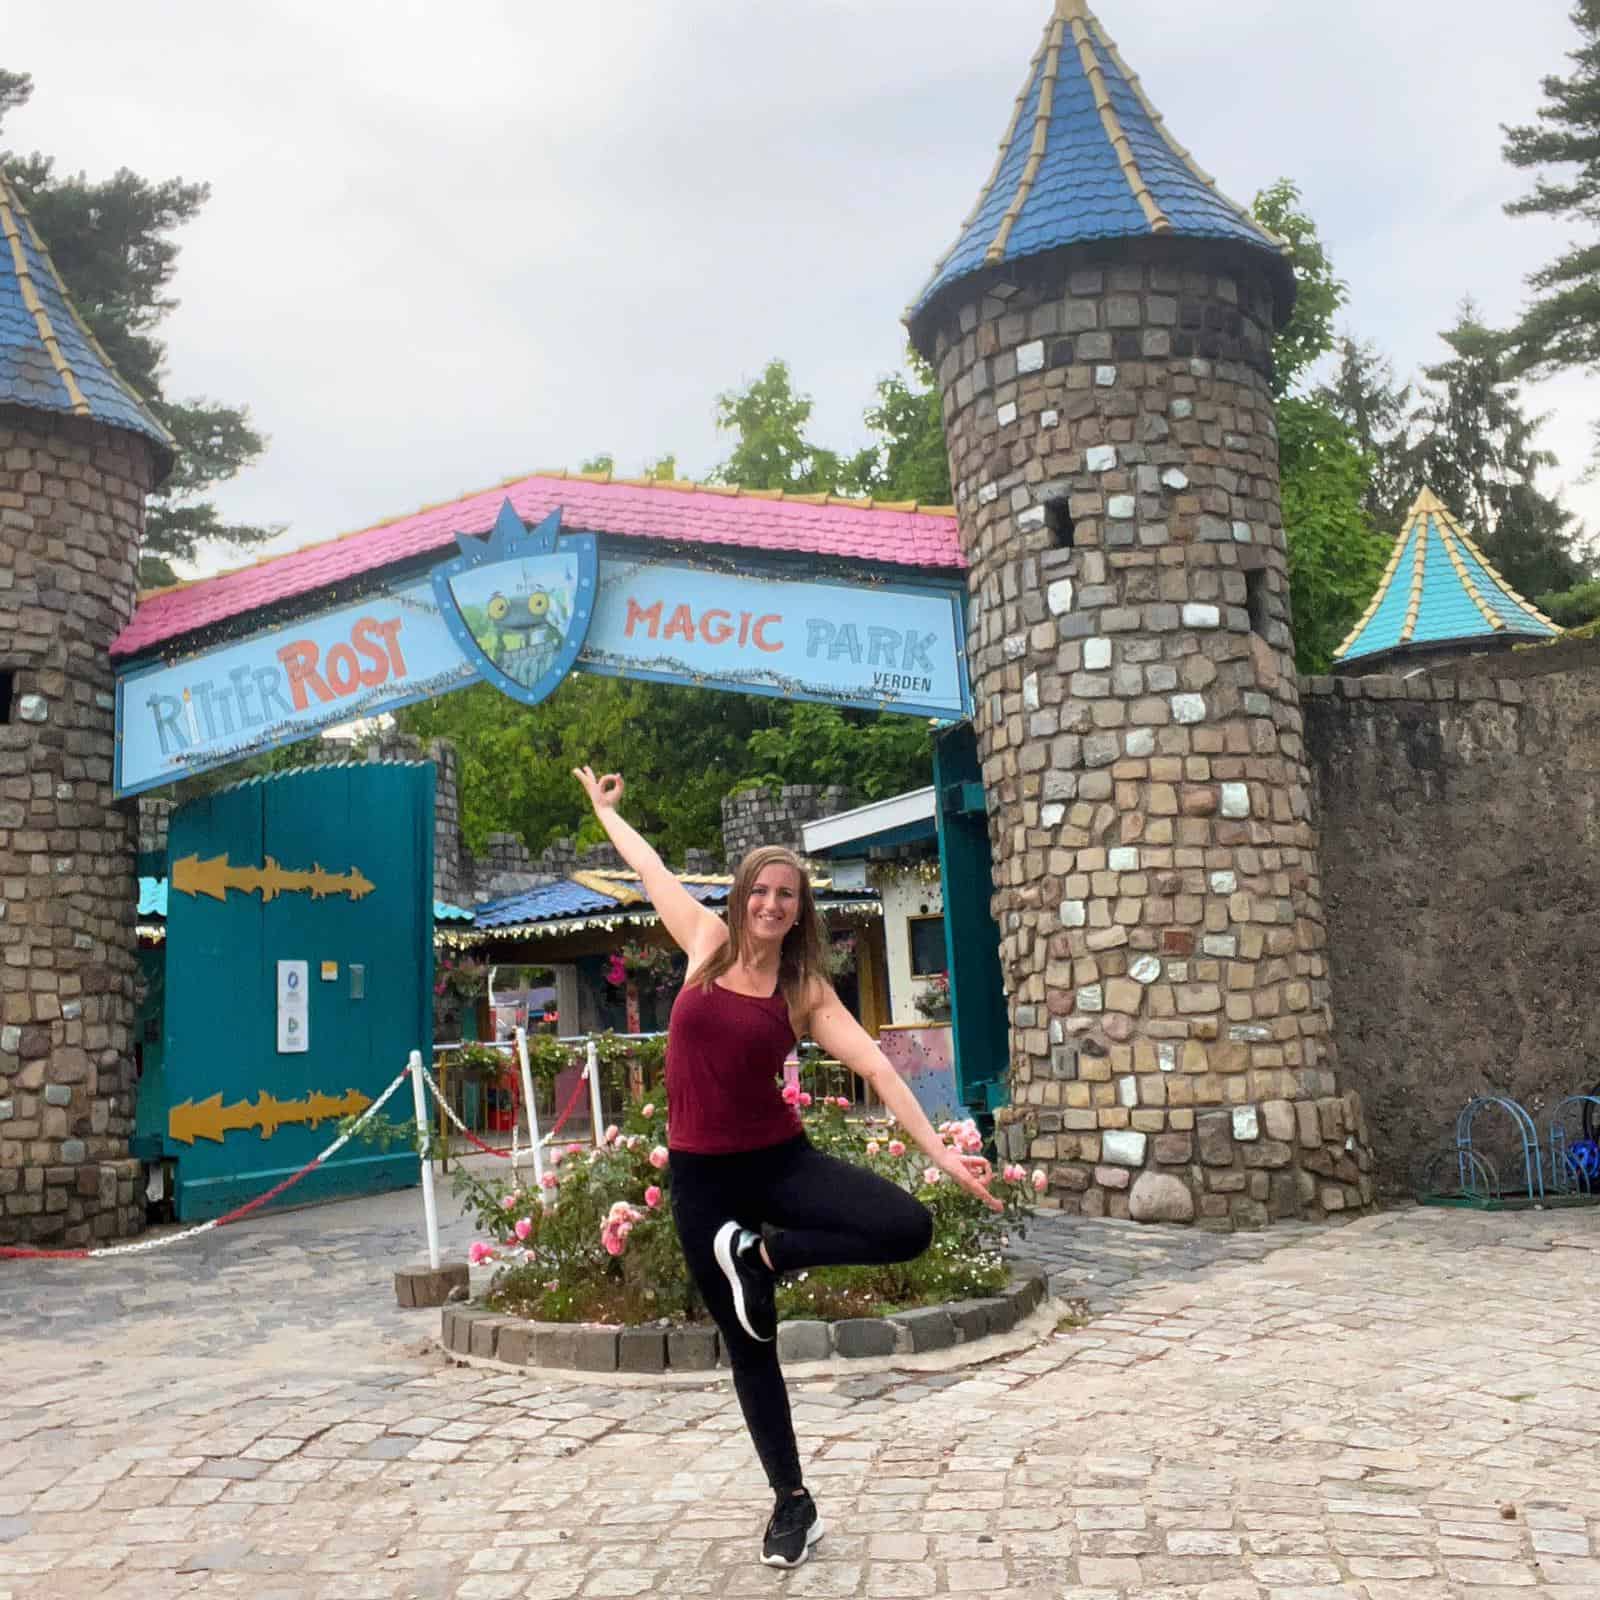 Magische Yogazeit Ritter Rost Magic Park Verden